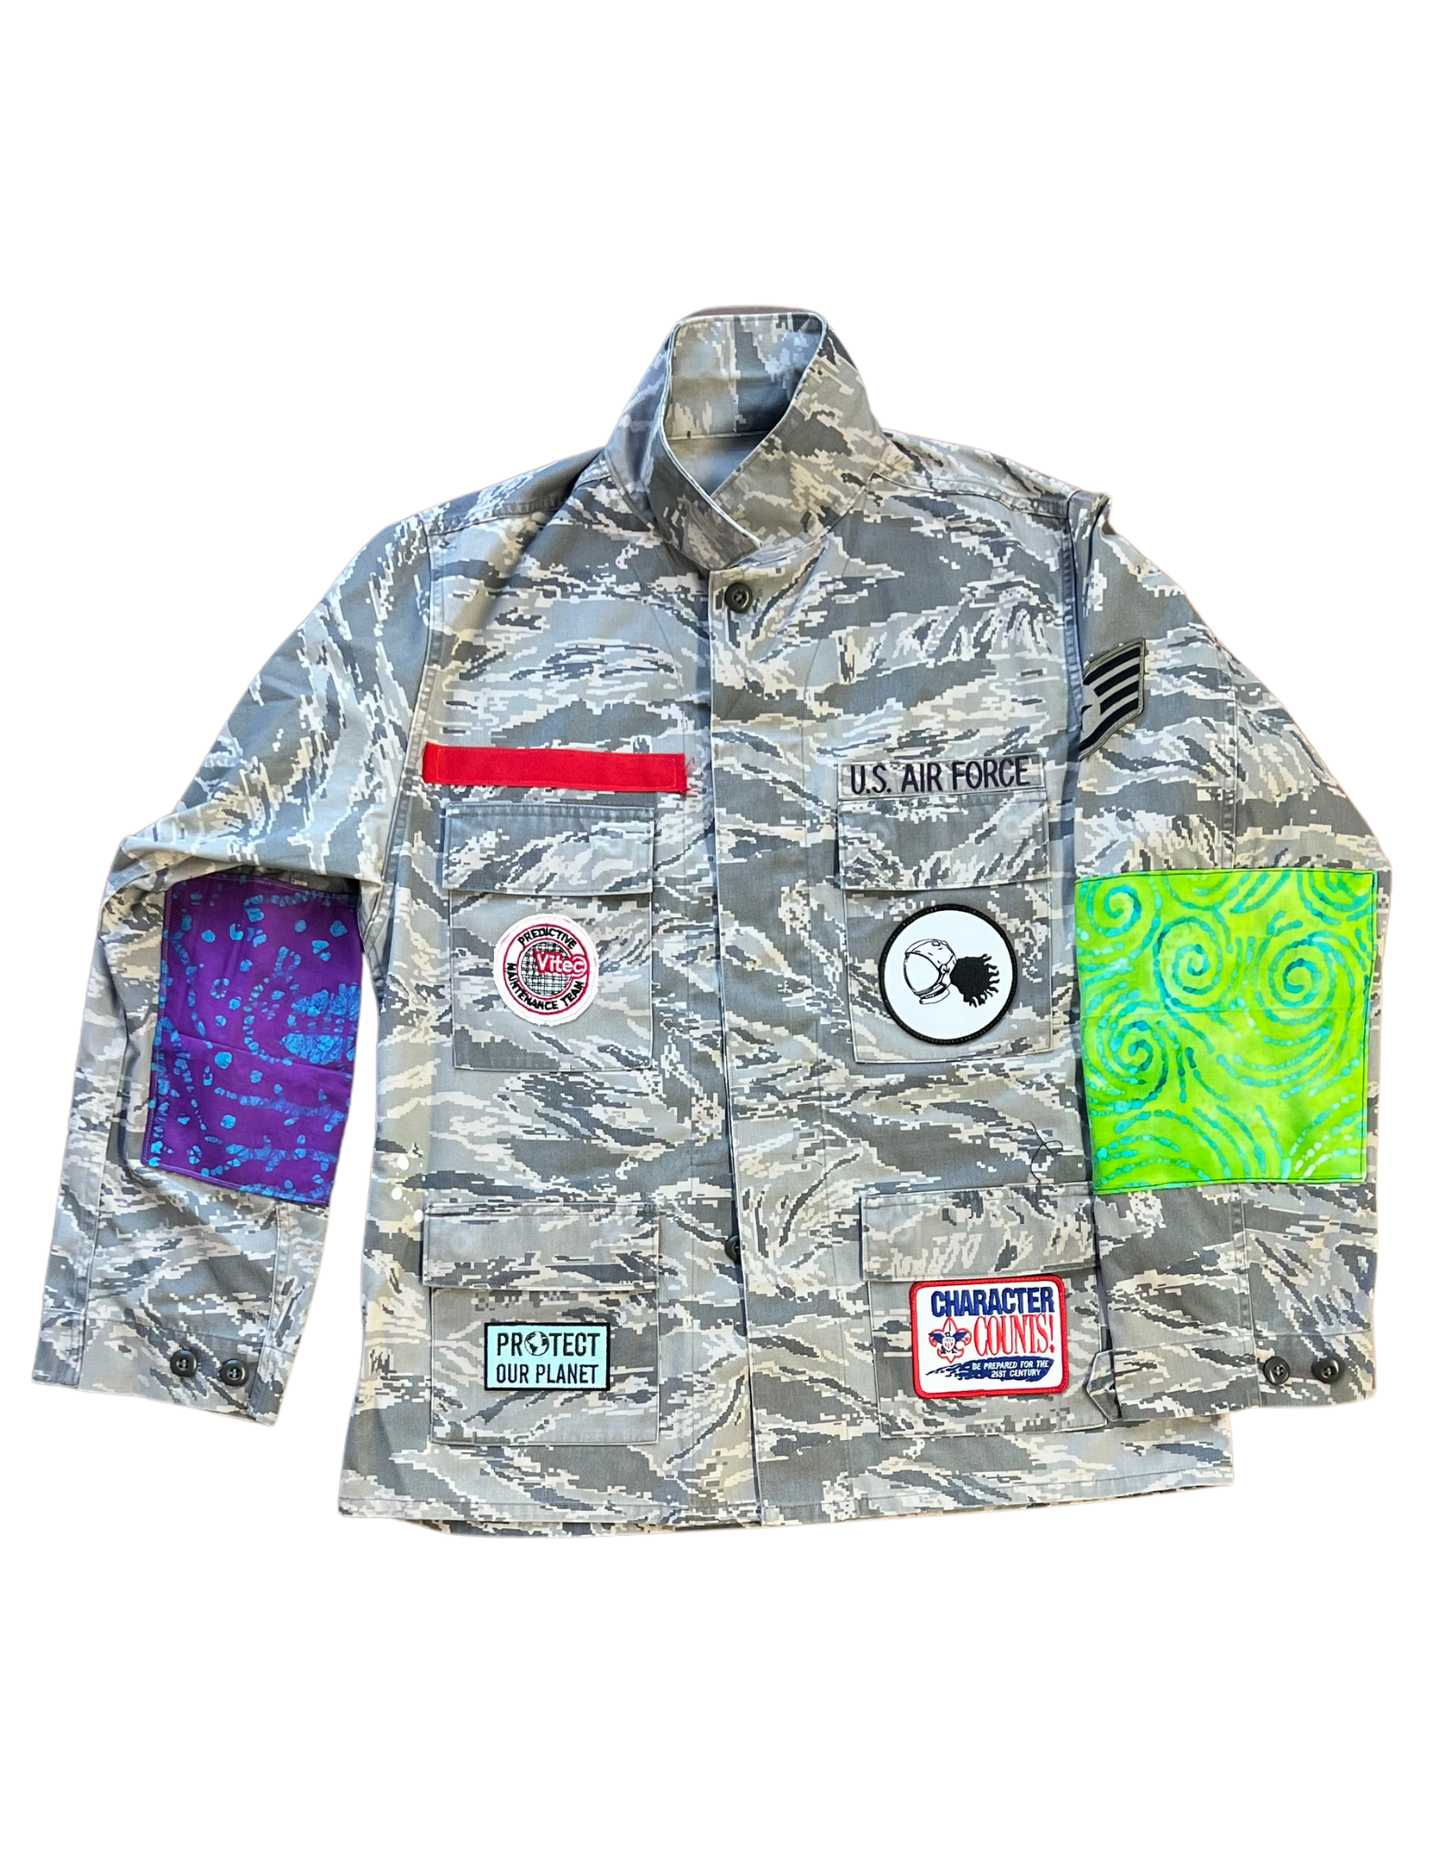 Space "F=ma" 2.0 Unisex Military Jacket